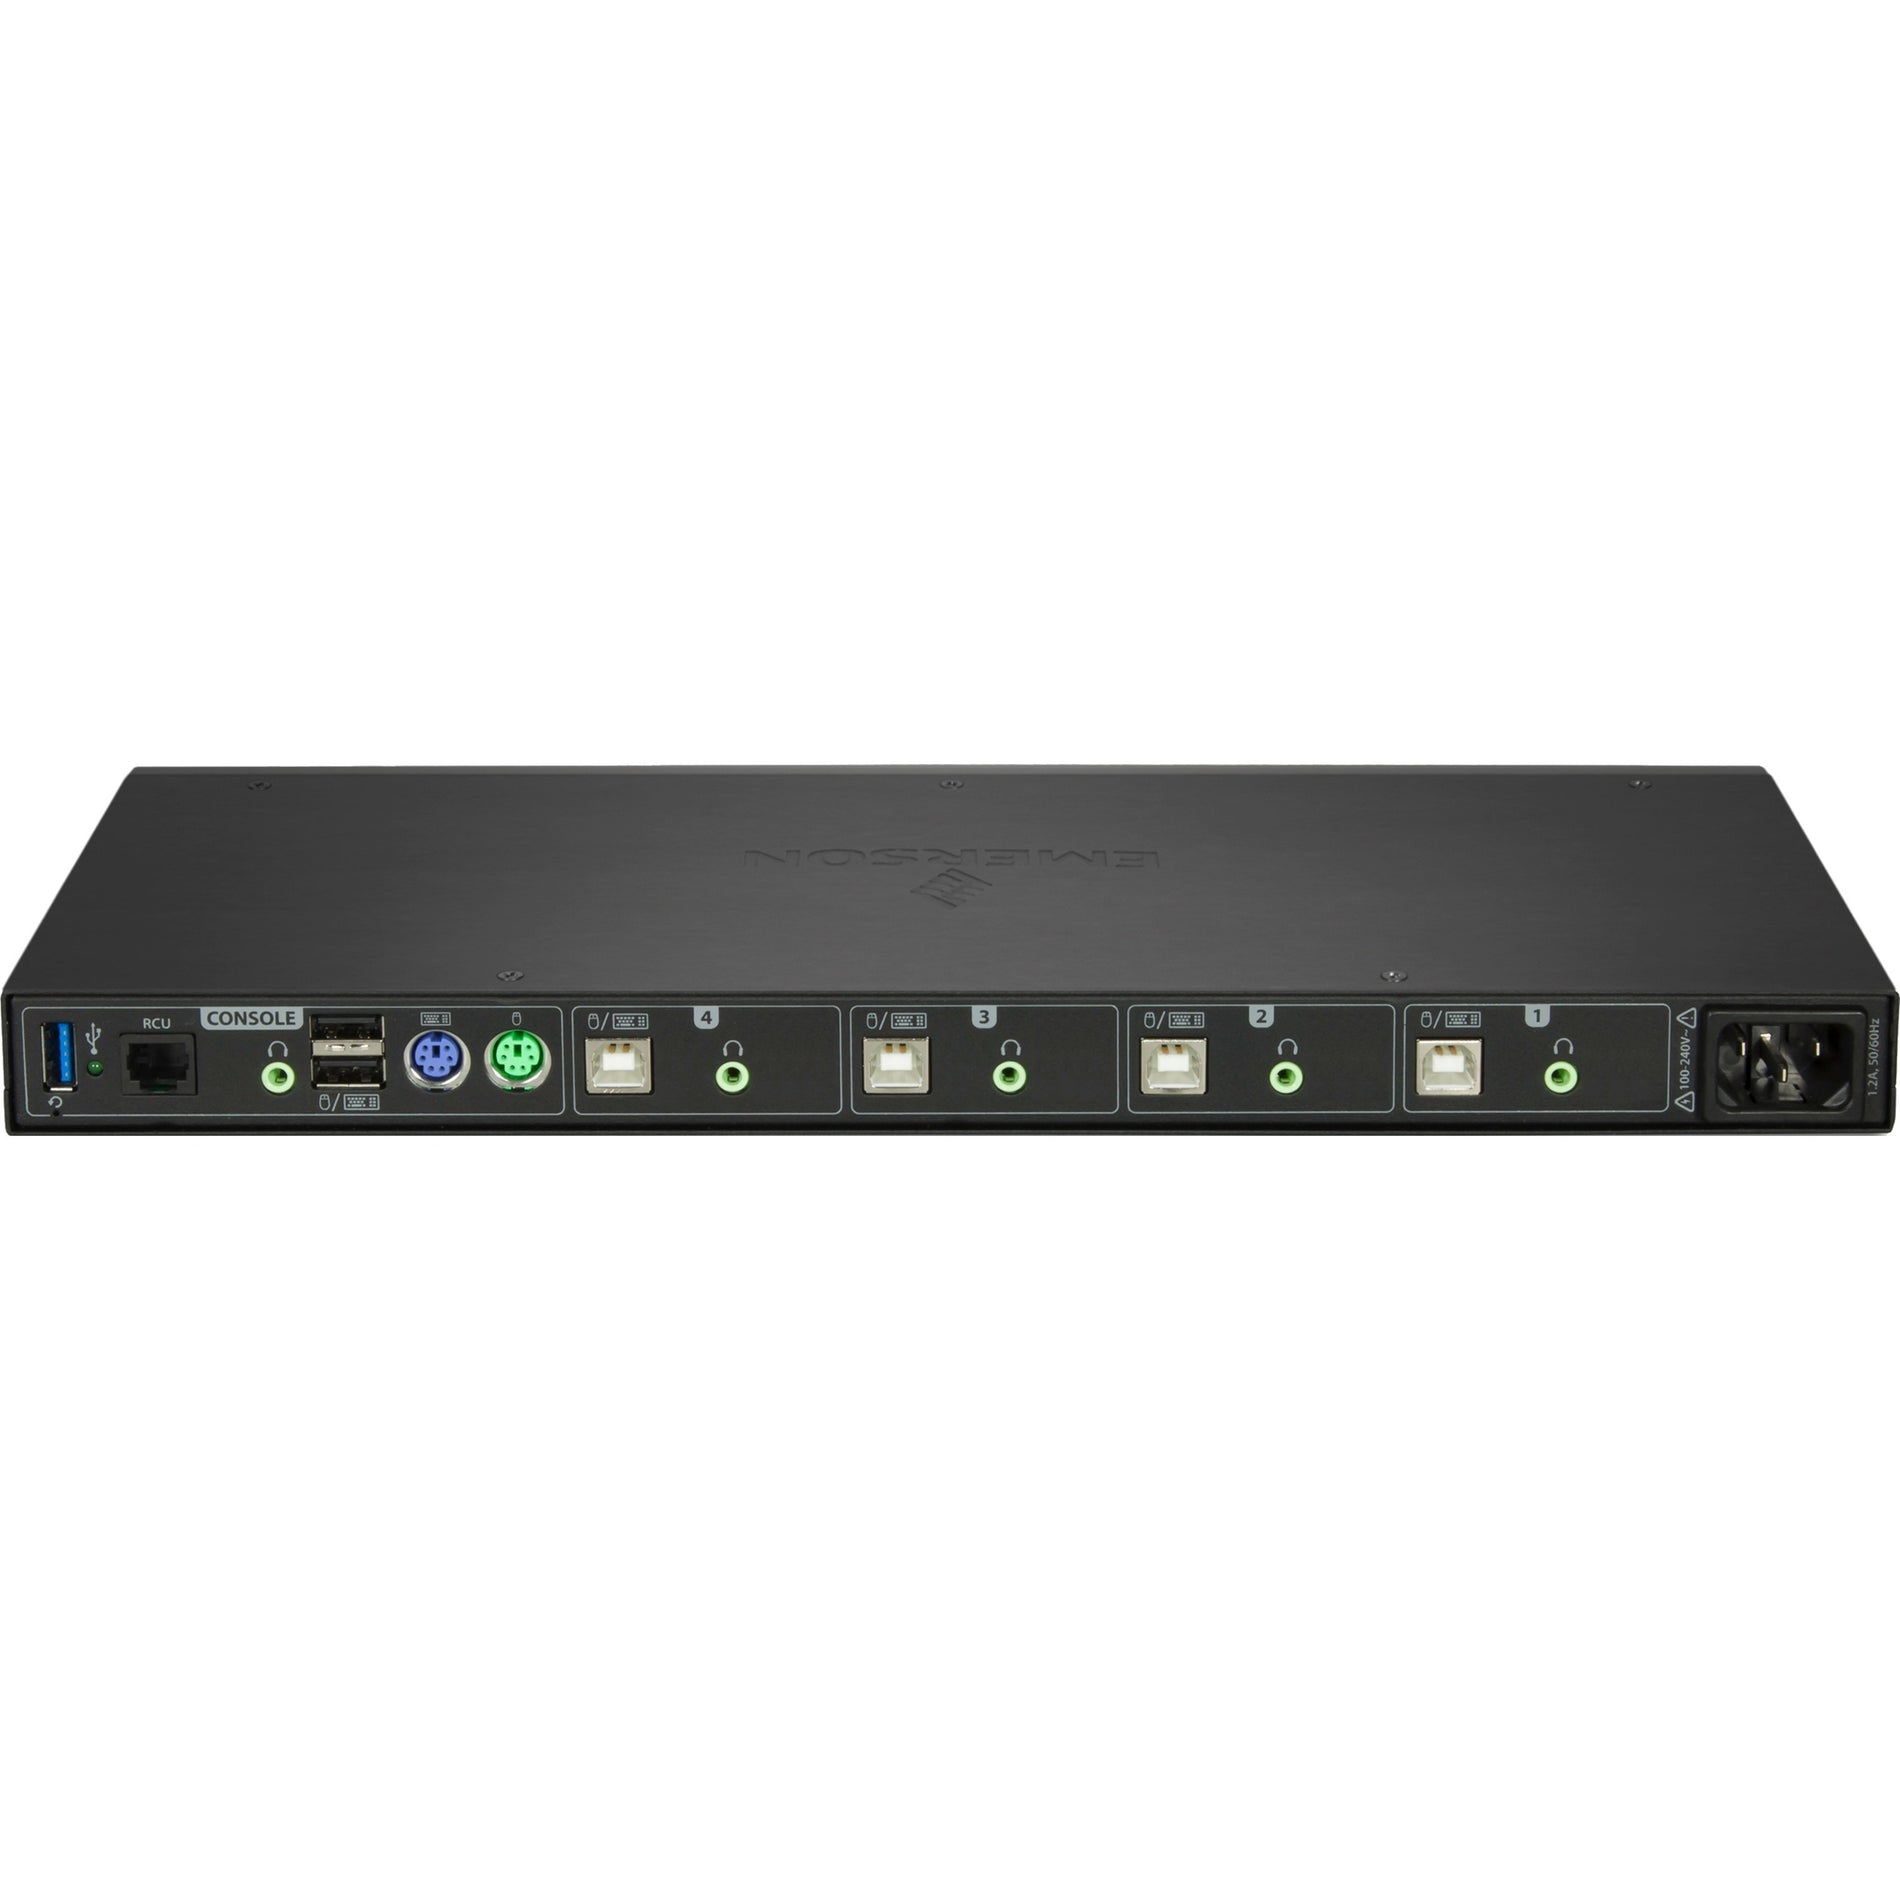 AVOCENT SCKM140-001 Cybex 4 Port Secure Desktop KM Switch, USB/PS/2, TAA Compliant, IP52